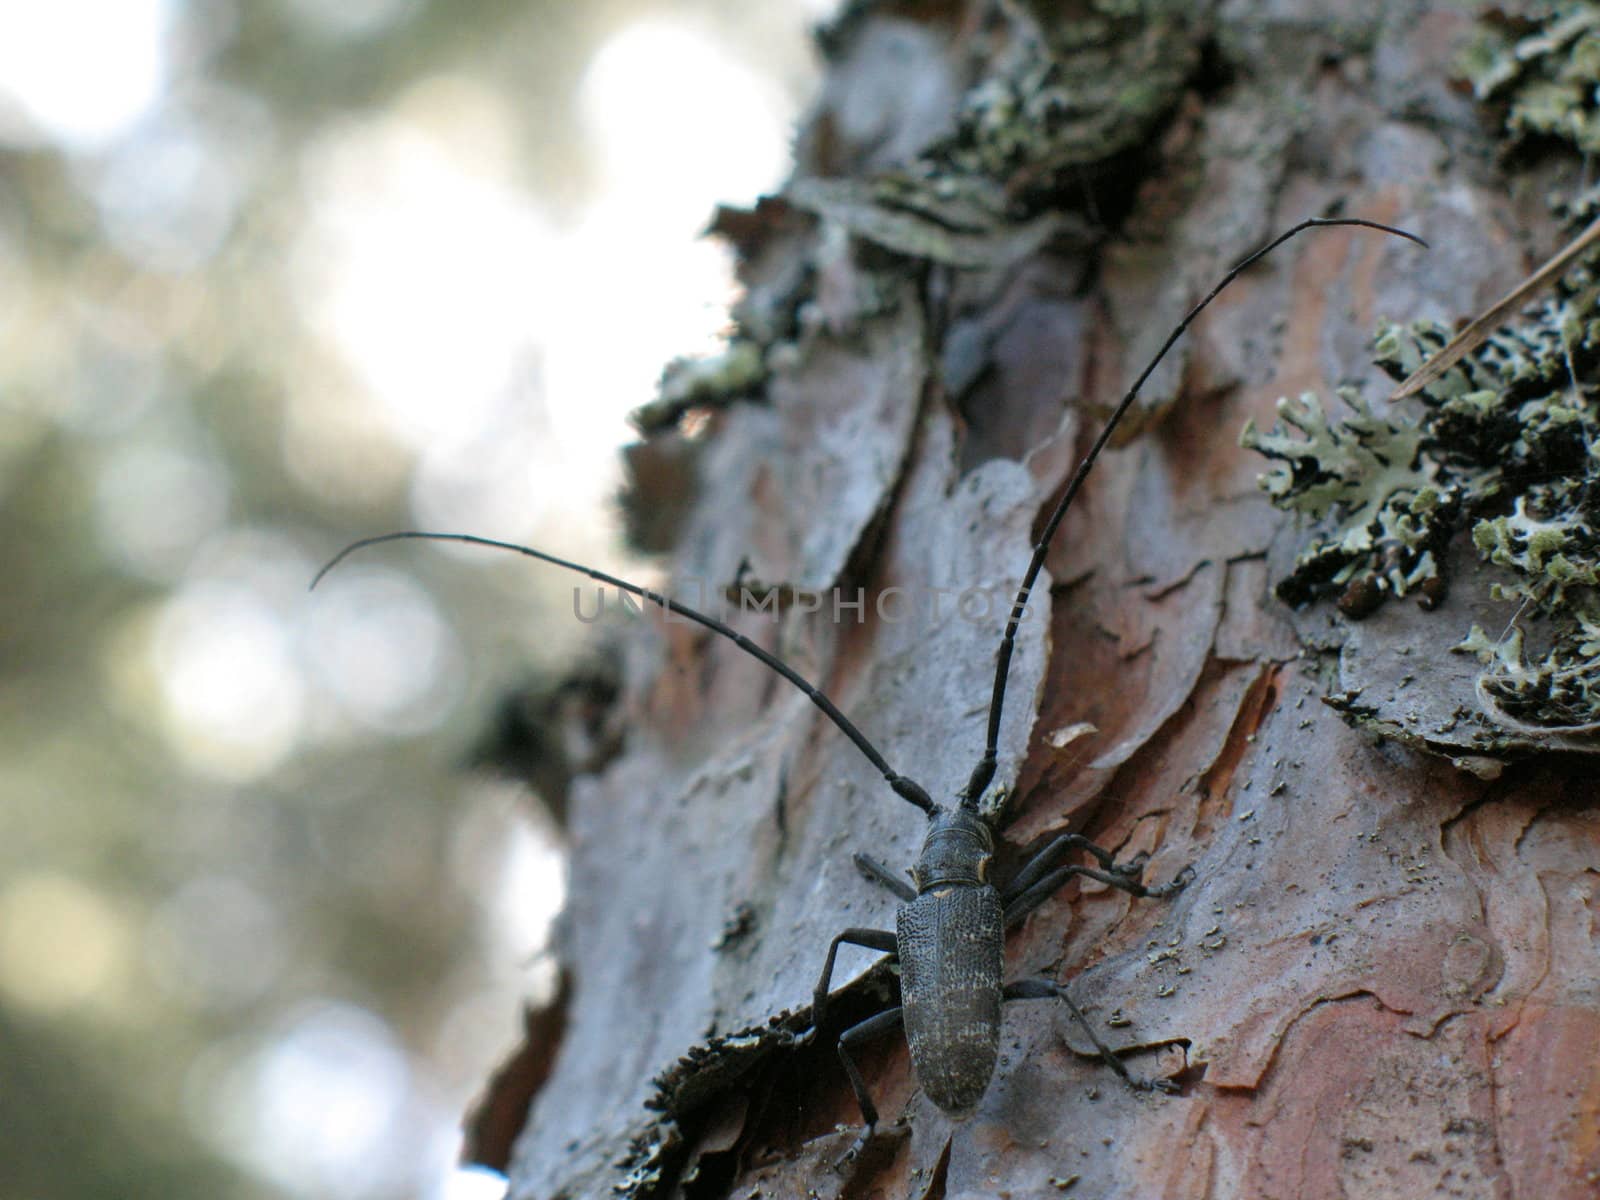 Bark bug on the tree by Vitamin